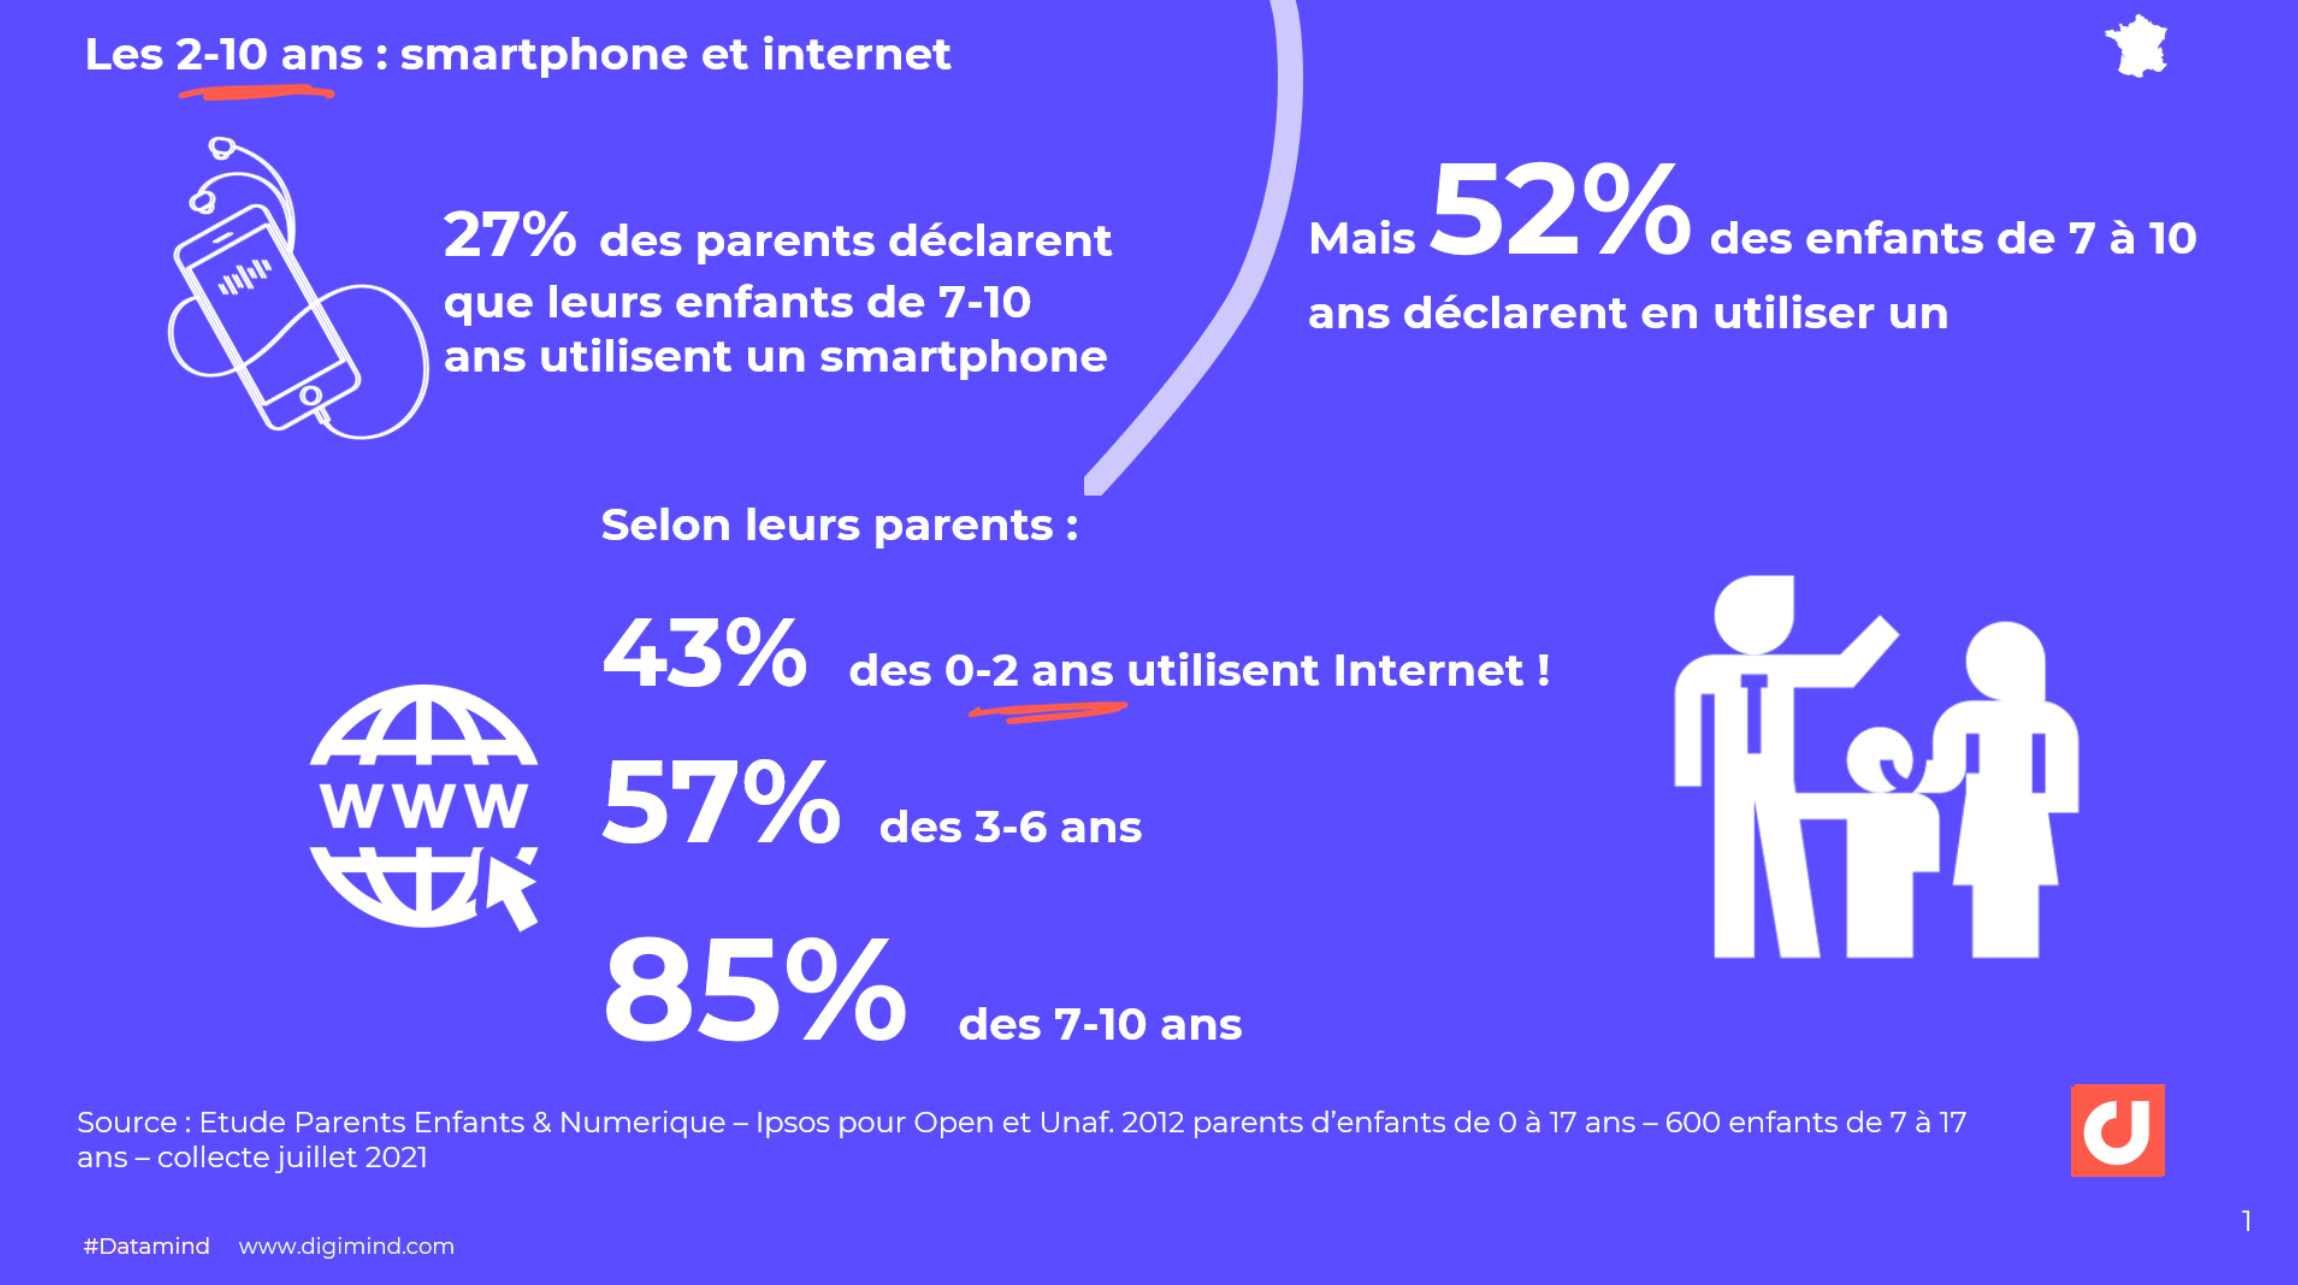 Usage des smartphones et internet chez les enfants en France